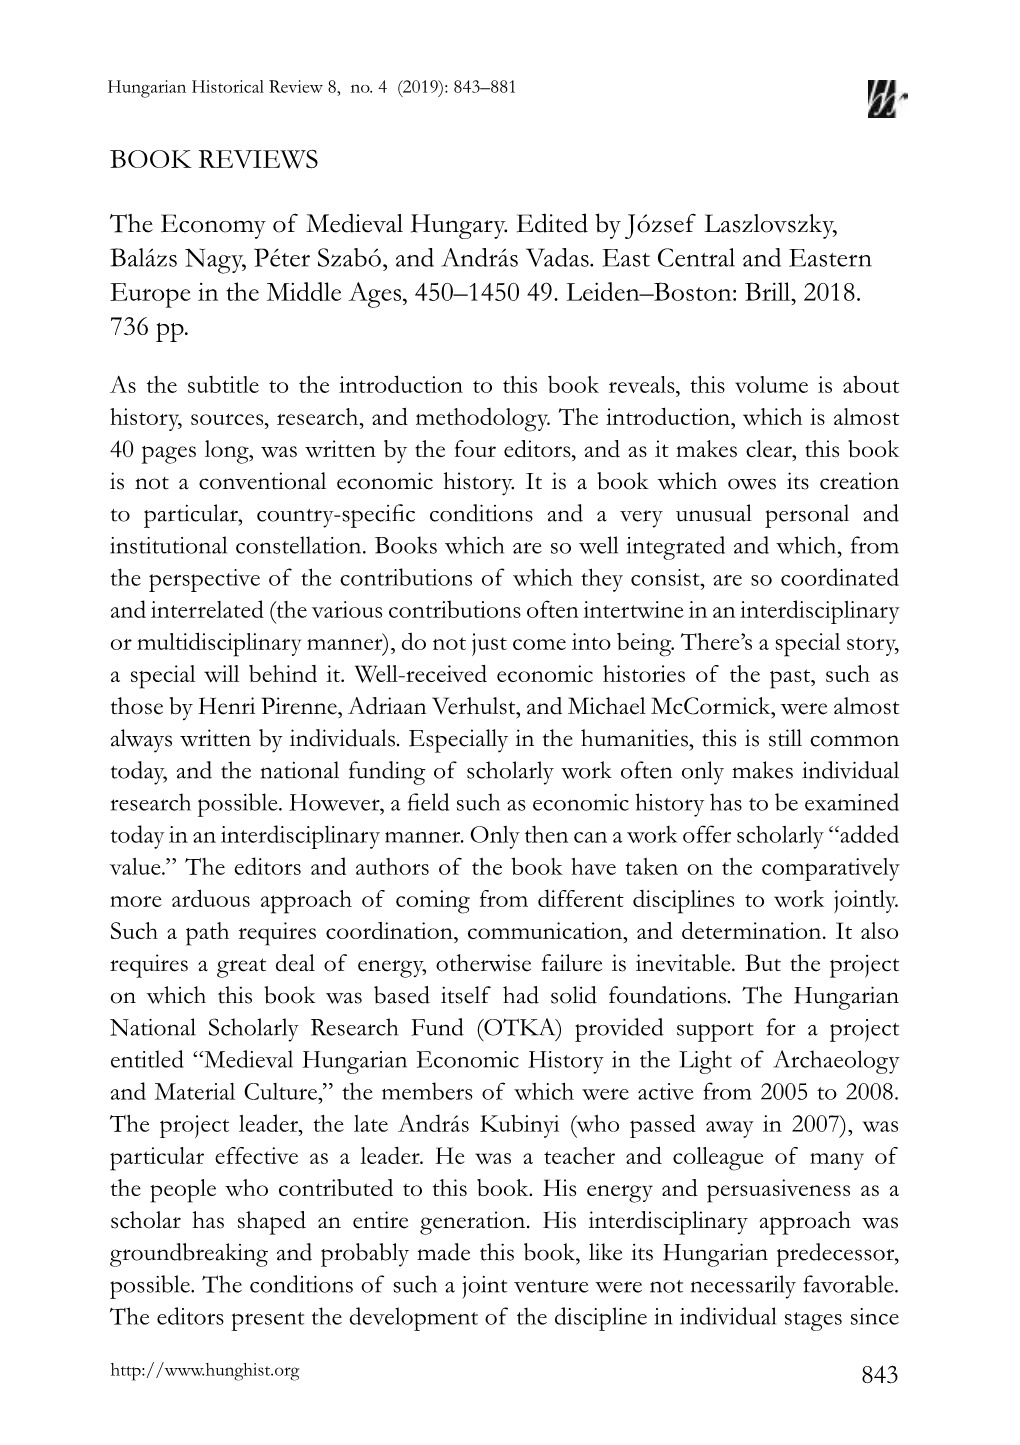 BOOK REVIEWS the Economy of Medieval Hungary. Edited by József Laszlovszky, Balázs Nagy, Péter Szabó, and András Vadas